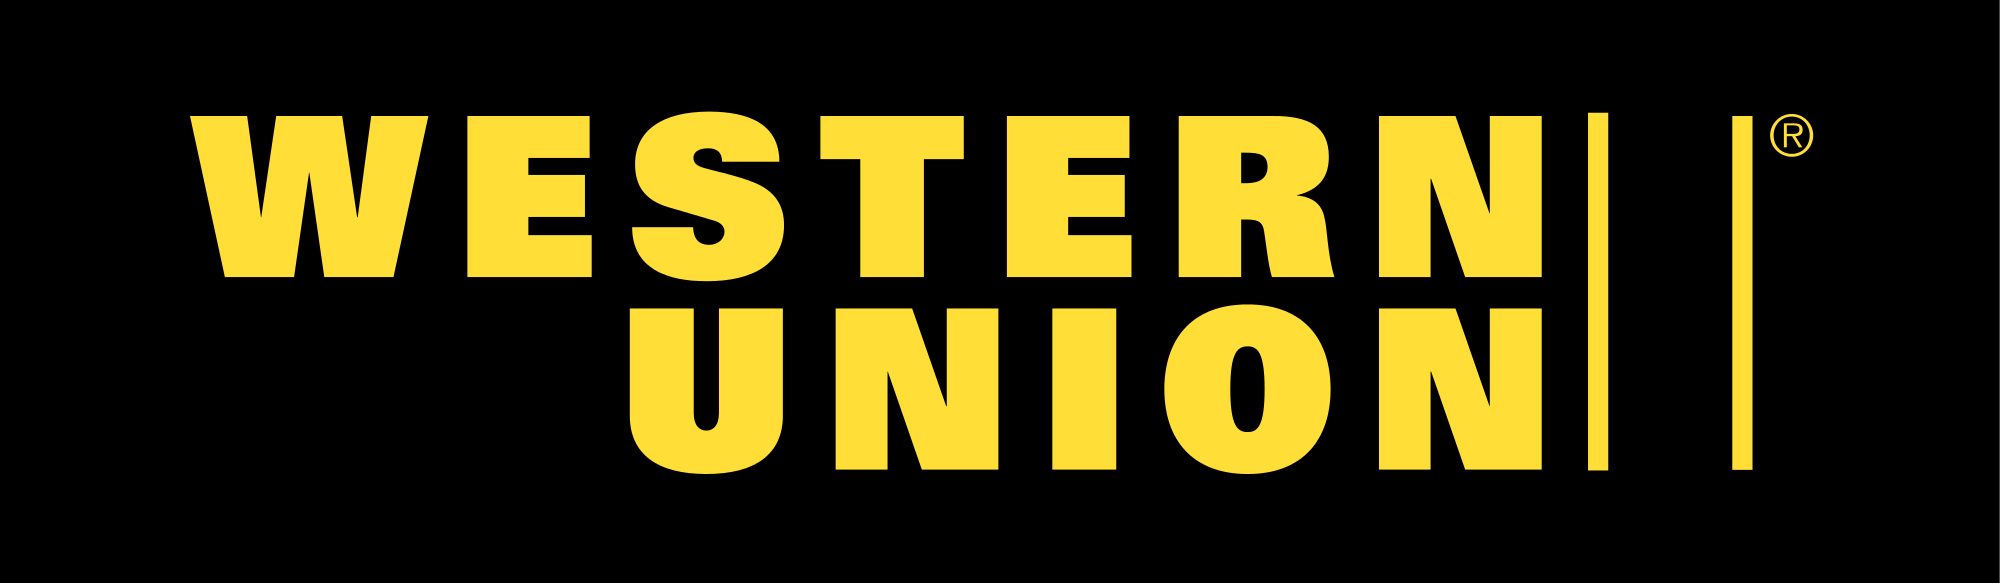 Western Union Logo PNG - 112048